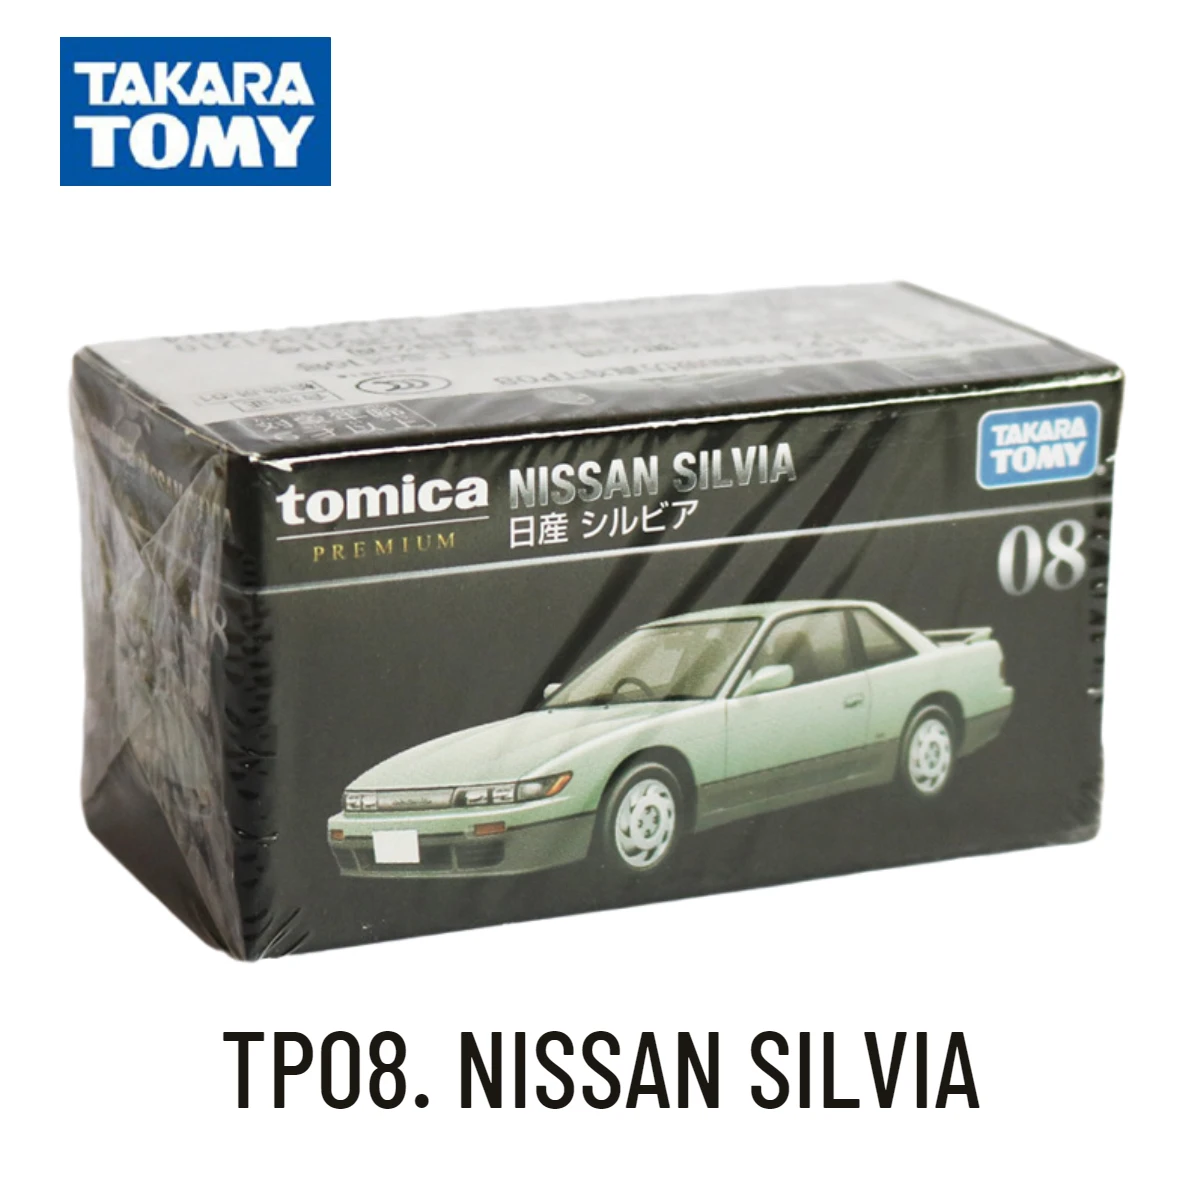 Takara Tomy Tomica Premium TP Scale Car Model NISSAN SILVIA Kids Room Decor Halloween Xmas Gift Toys for Baby Boys Girls